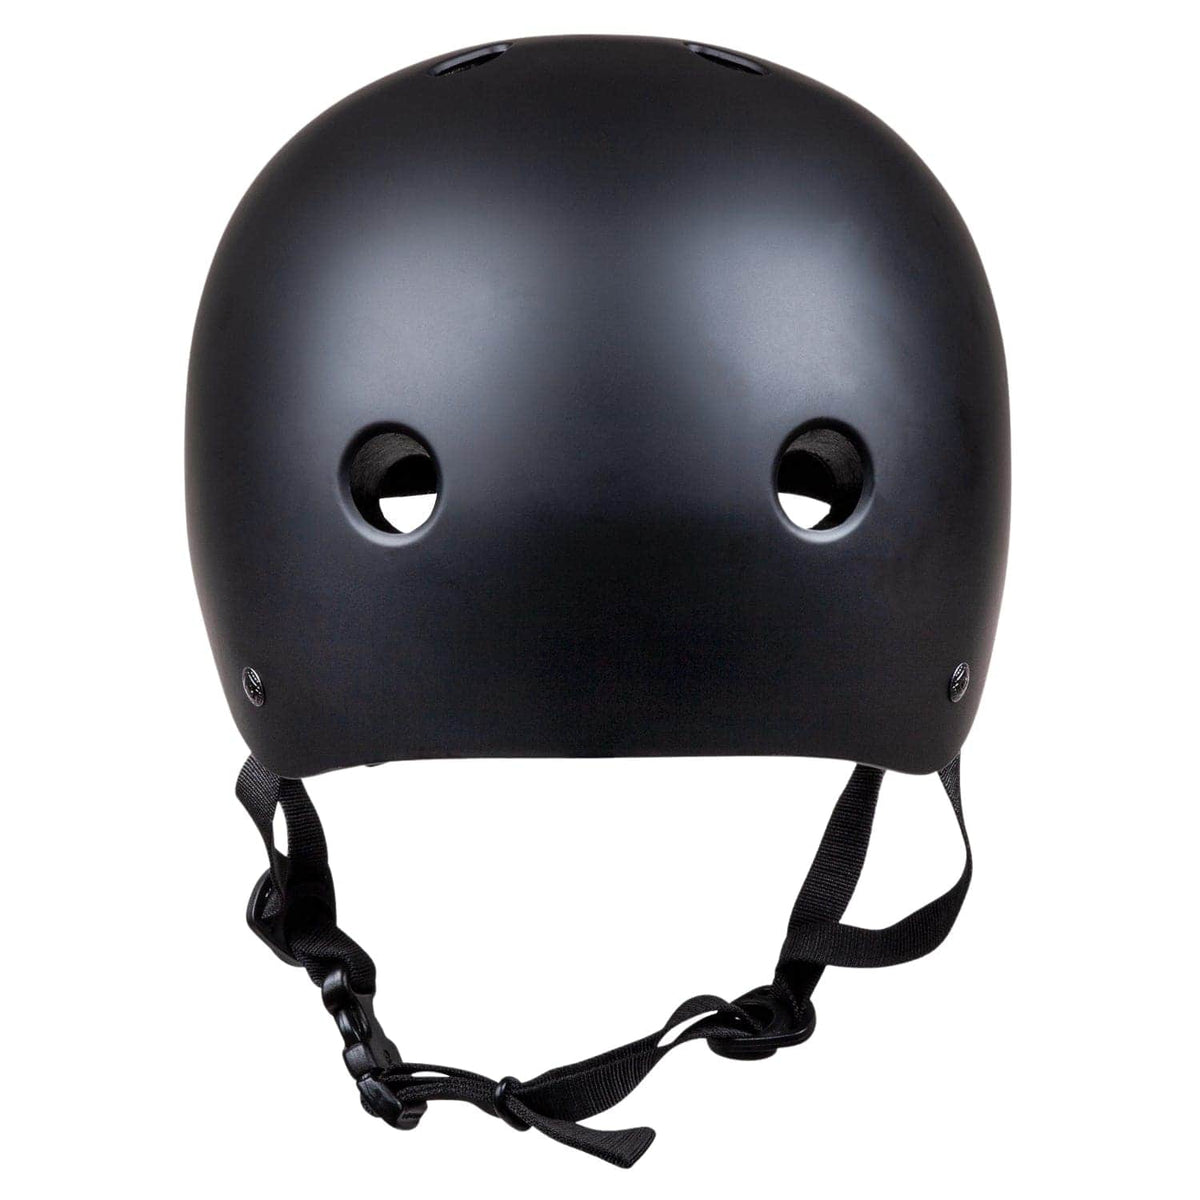 Pro-Tec Prime Helmet Black M/L (56-60cm) - Skateboard Helmet by Pro-Tec